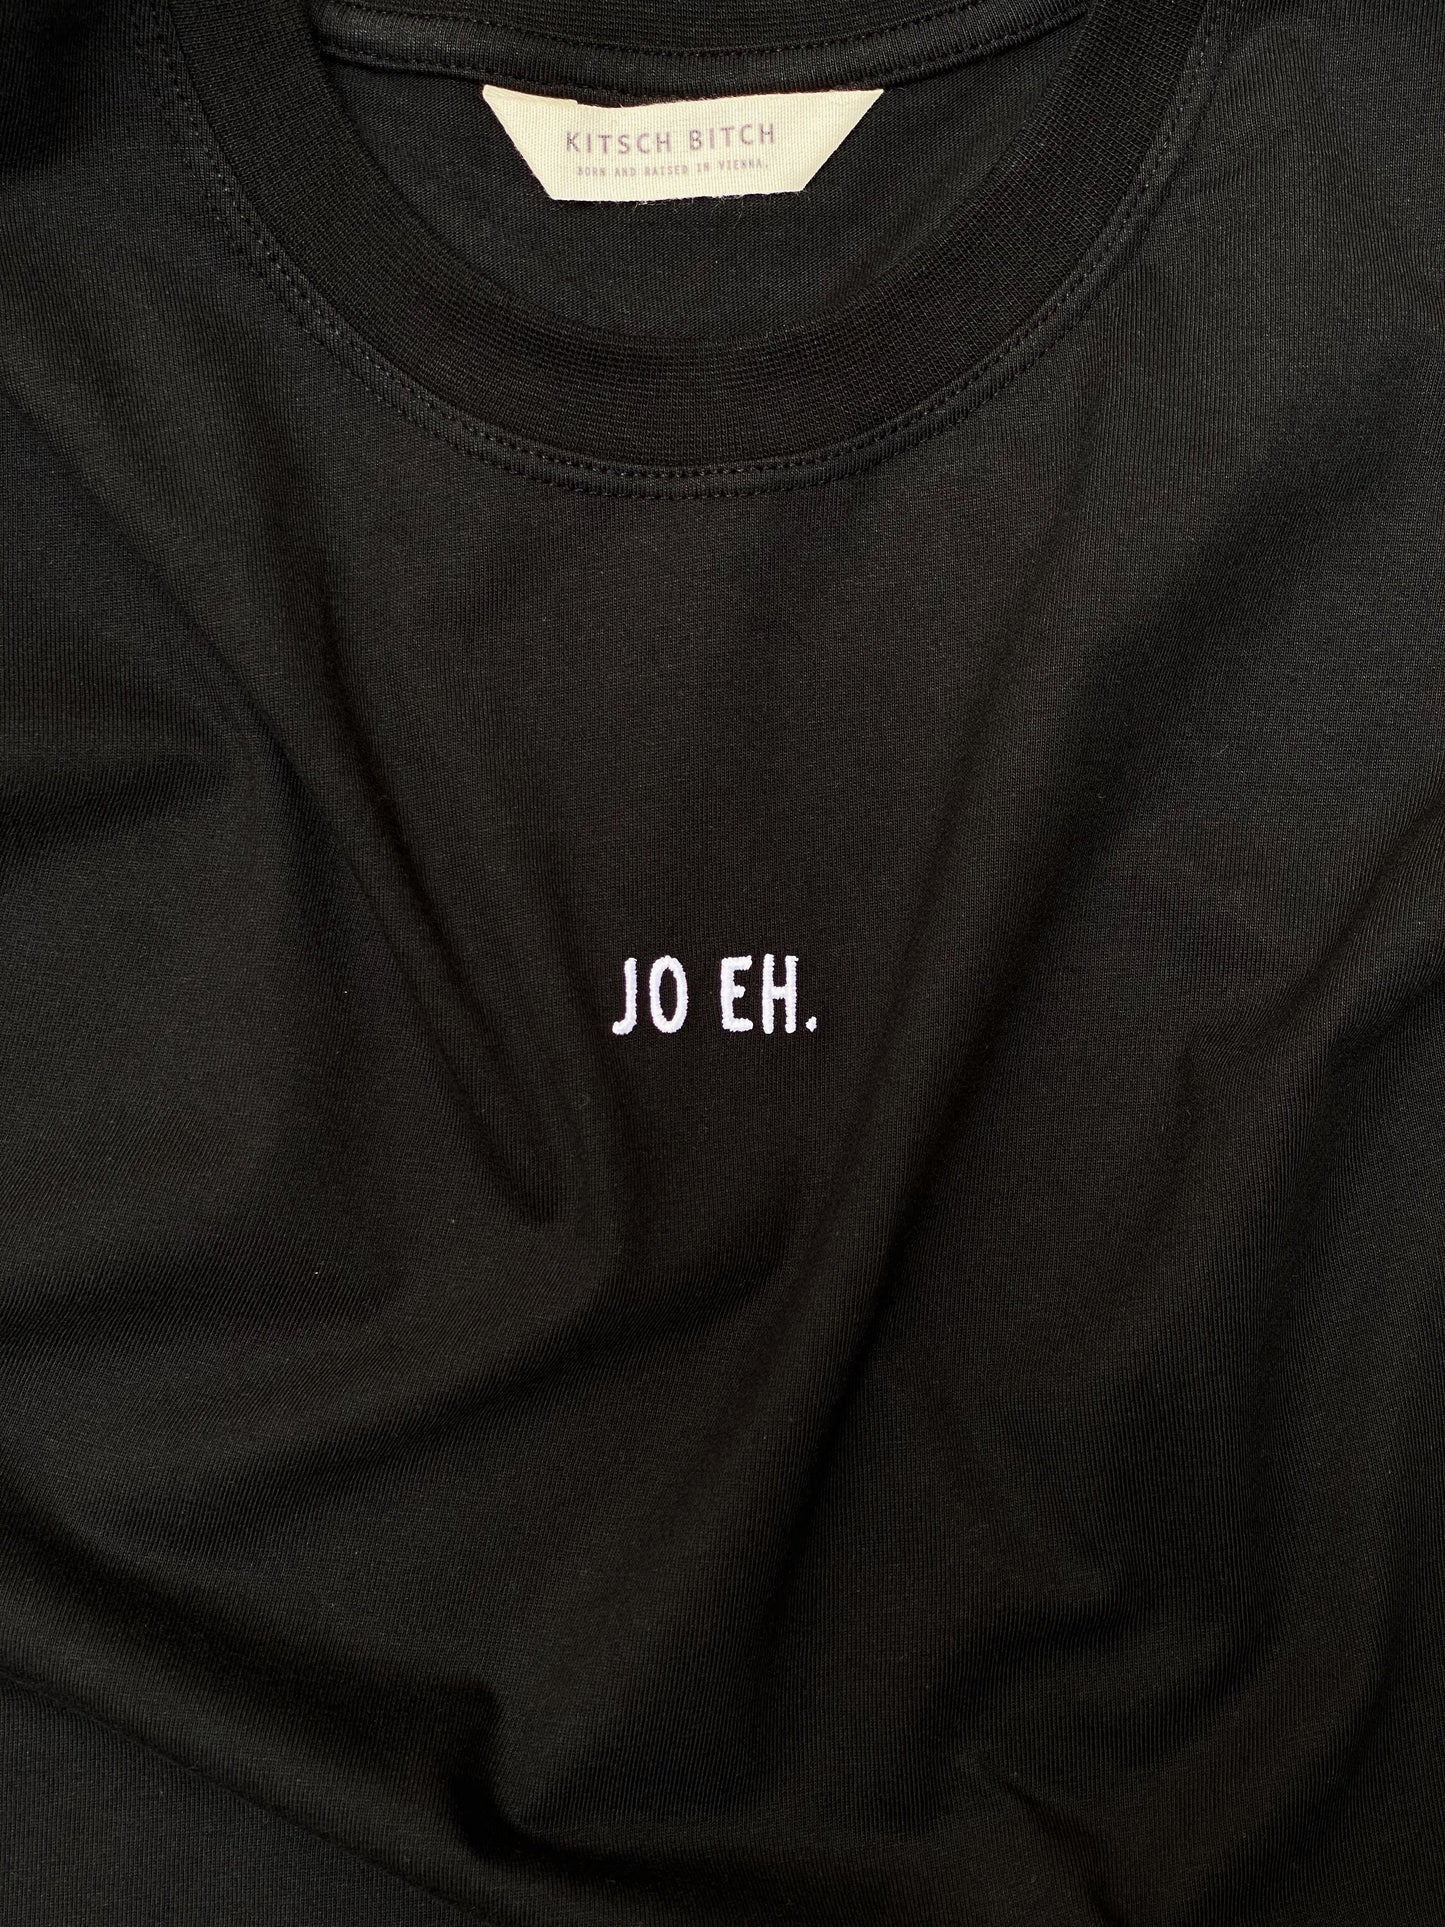 KITSCH BITCH Jo Eh Embroidery Unisex T-Shirt